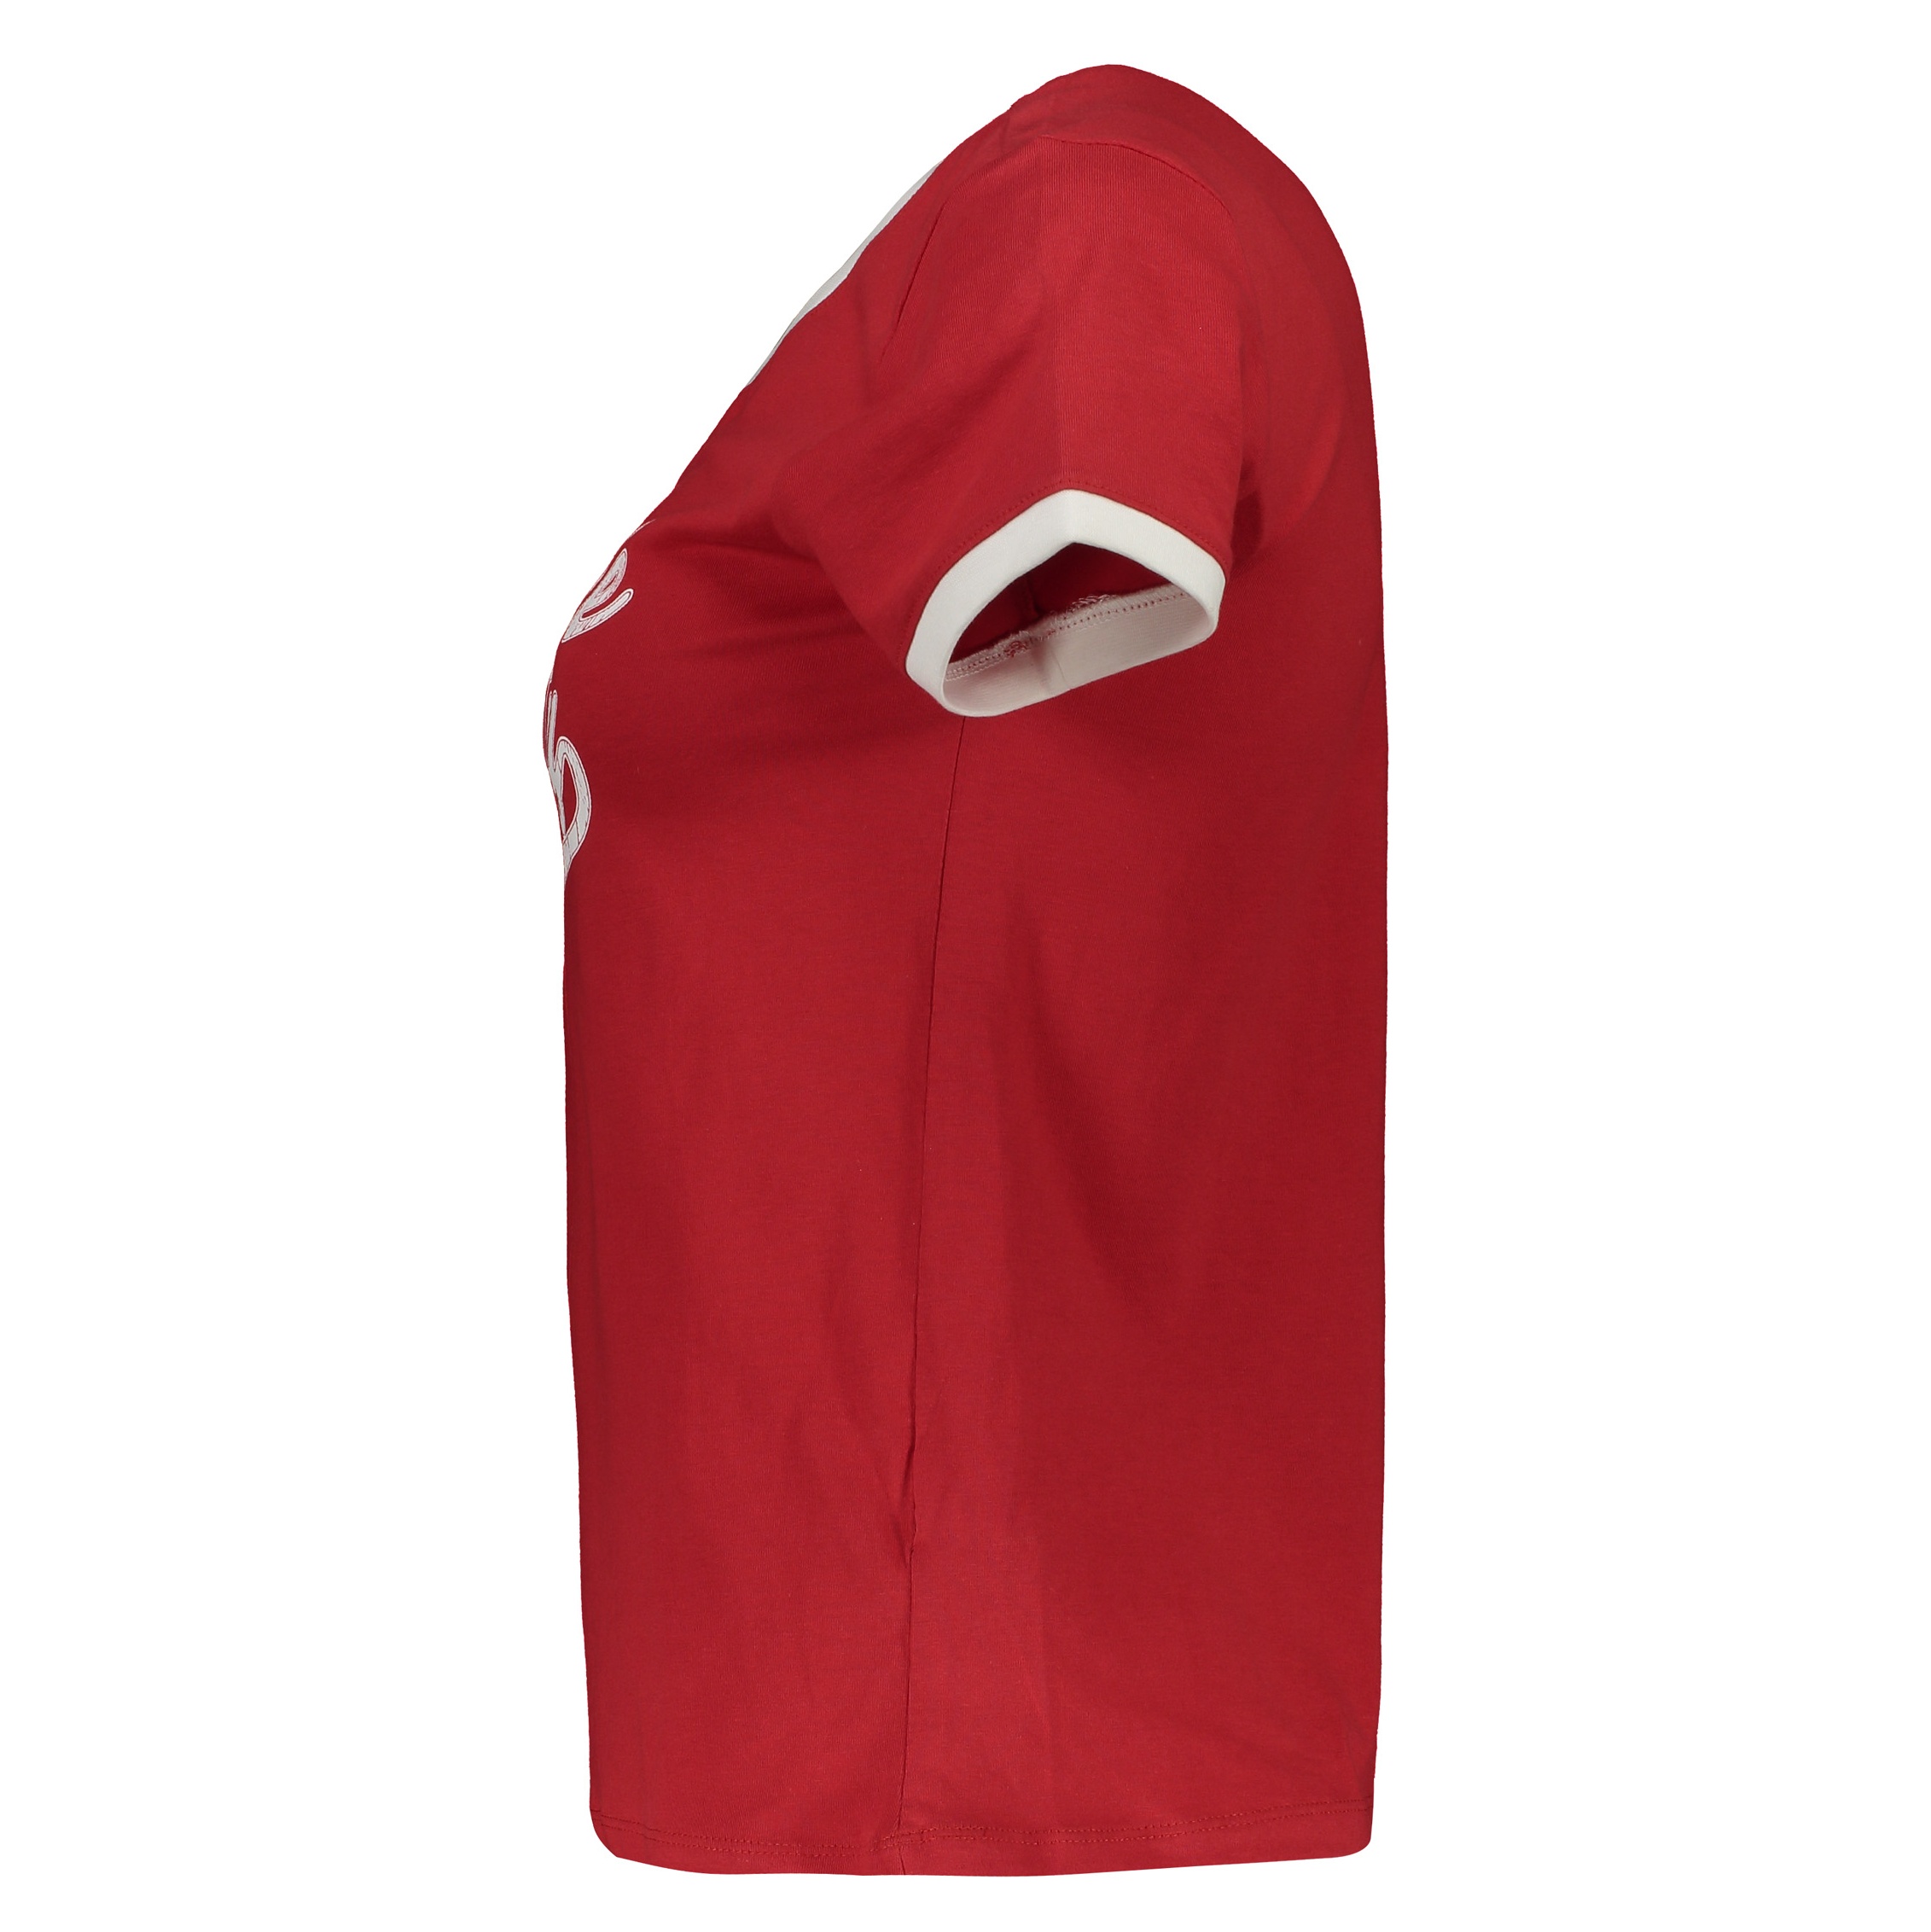 تی شرت زنانه کالینز مدل CL1032944-RED